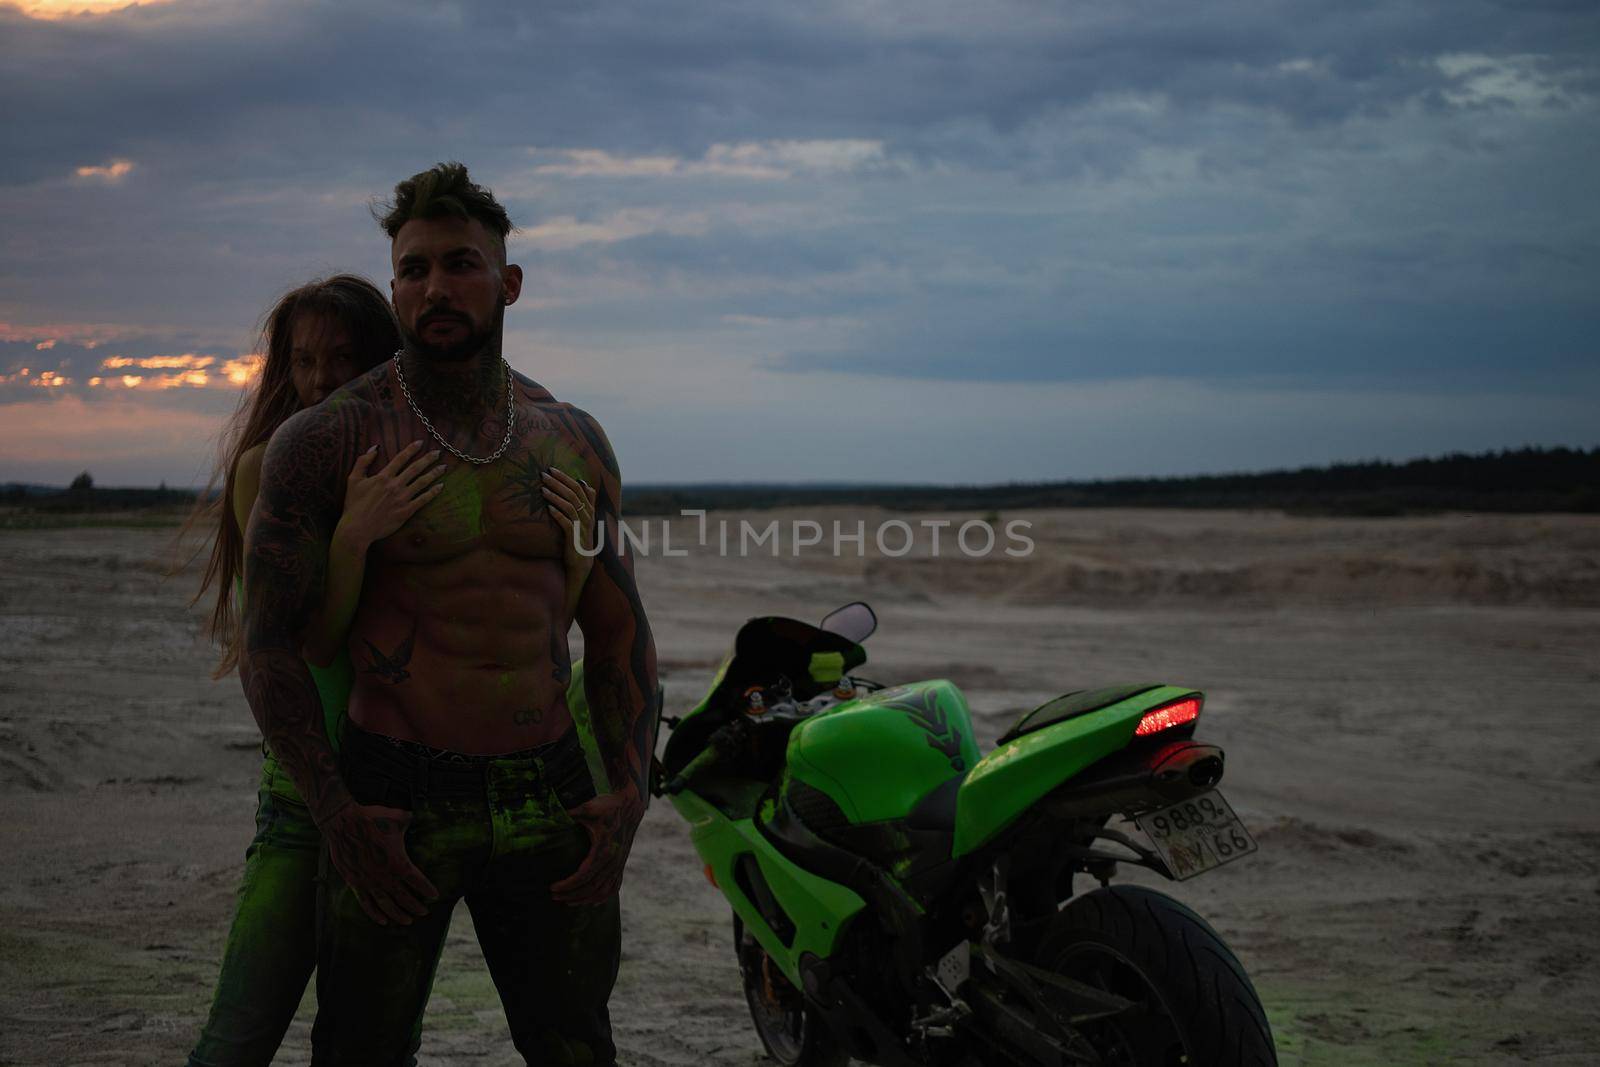 Couple embracing near motorbike on beach at sunset by 3KStudio